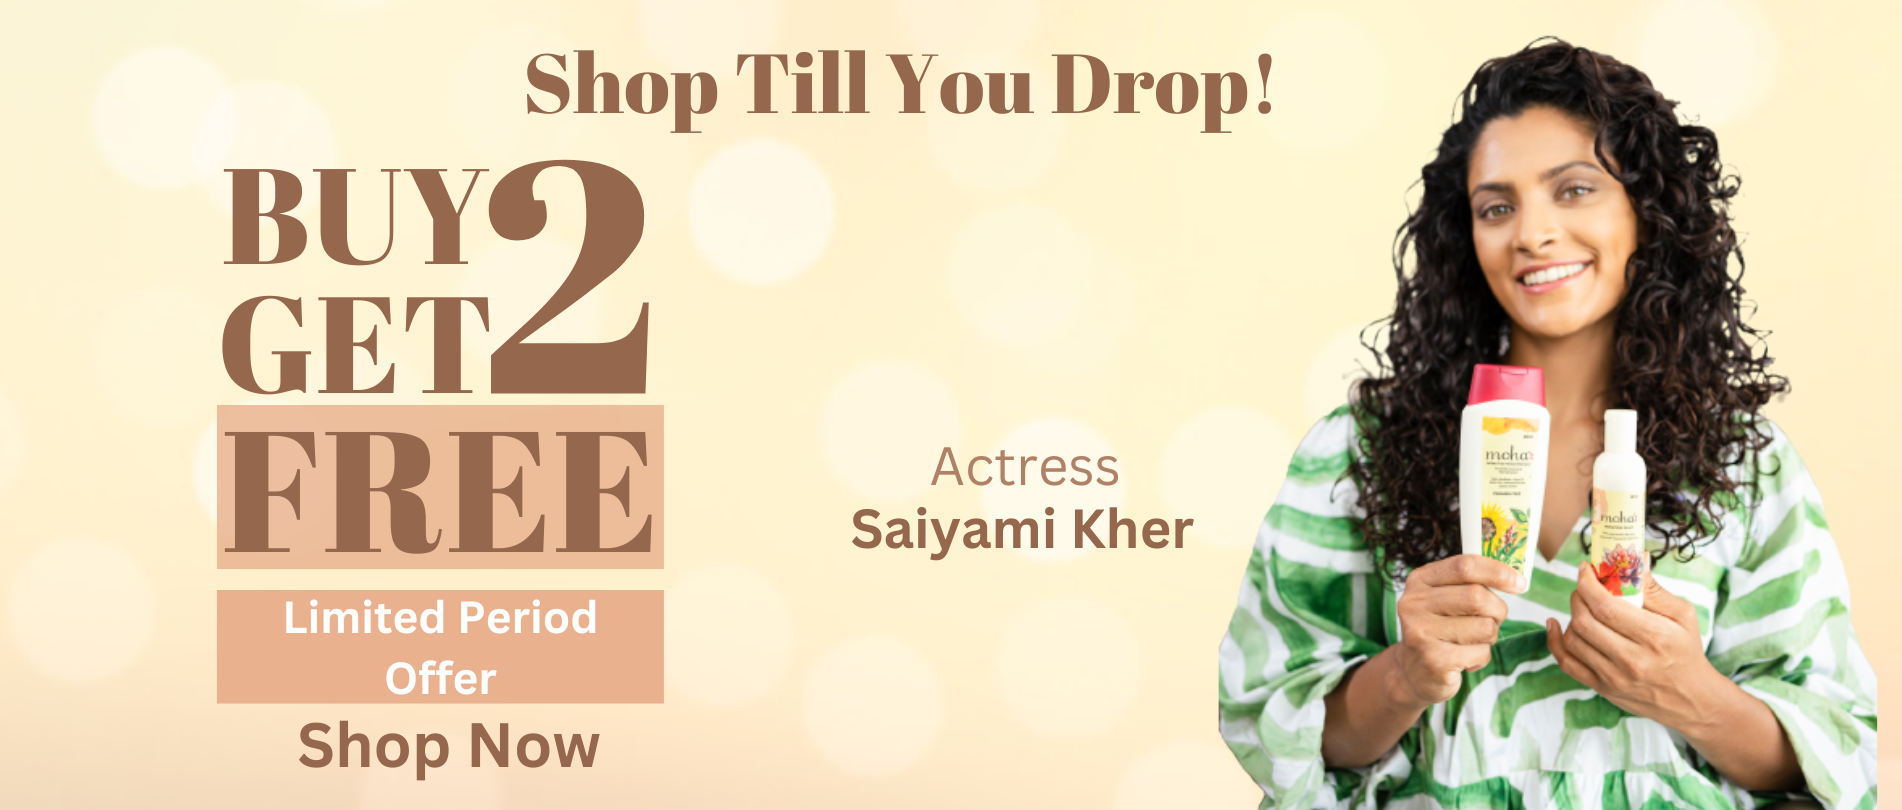 Buy 2 Get 2 Offer - Sayami Kher